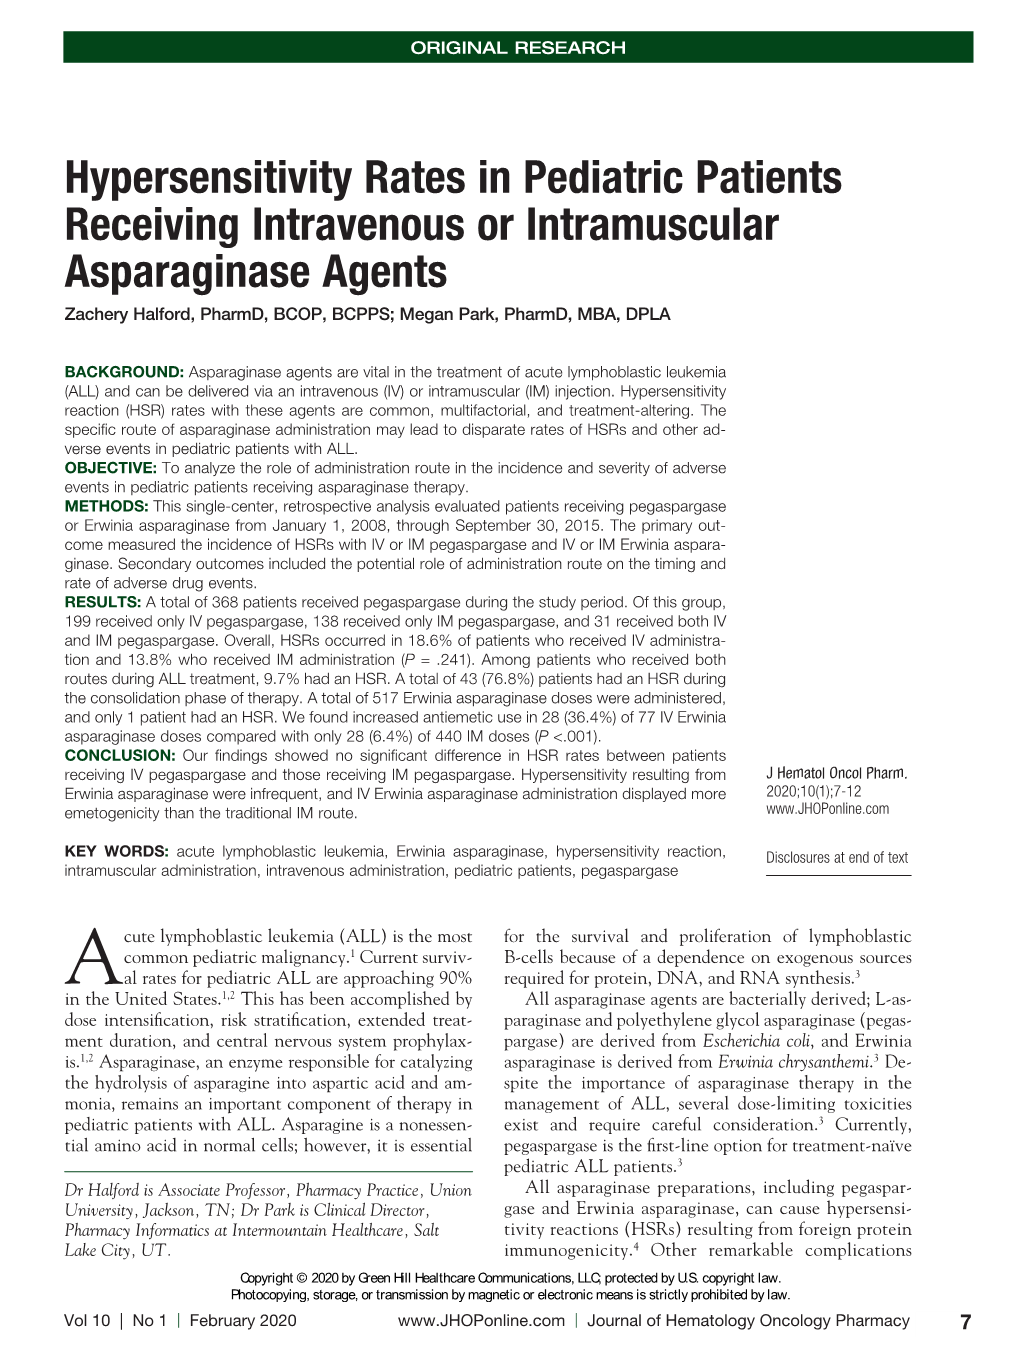 Hypersensitivity Rates in Pediatric Patients Receiving Intravenous Or Intramuscular Asparaginase Agents